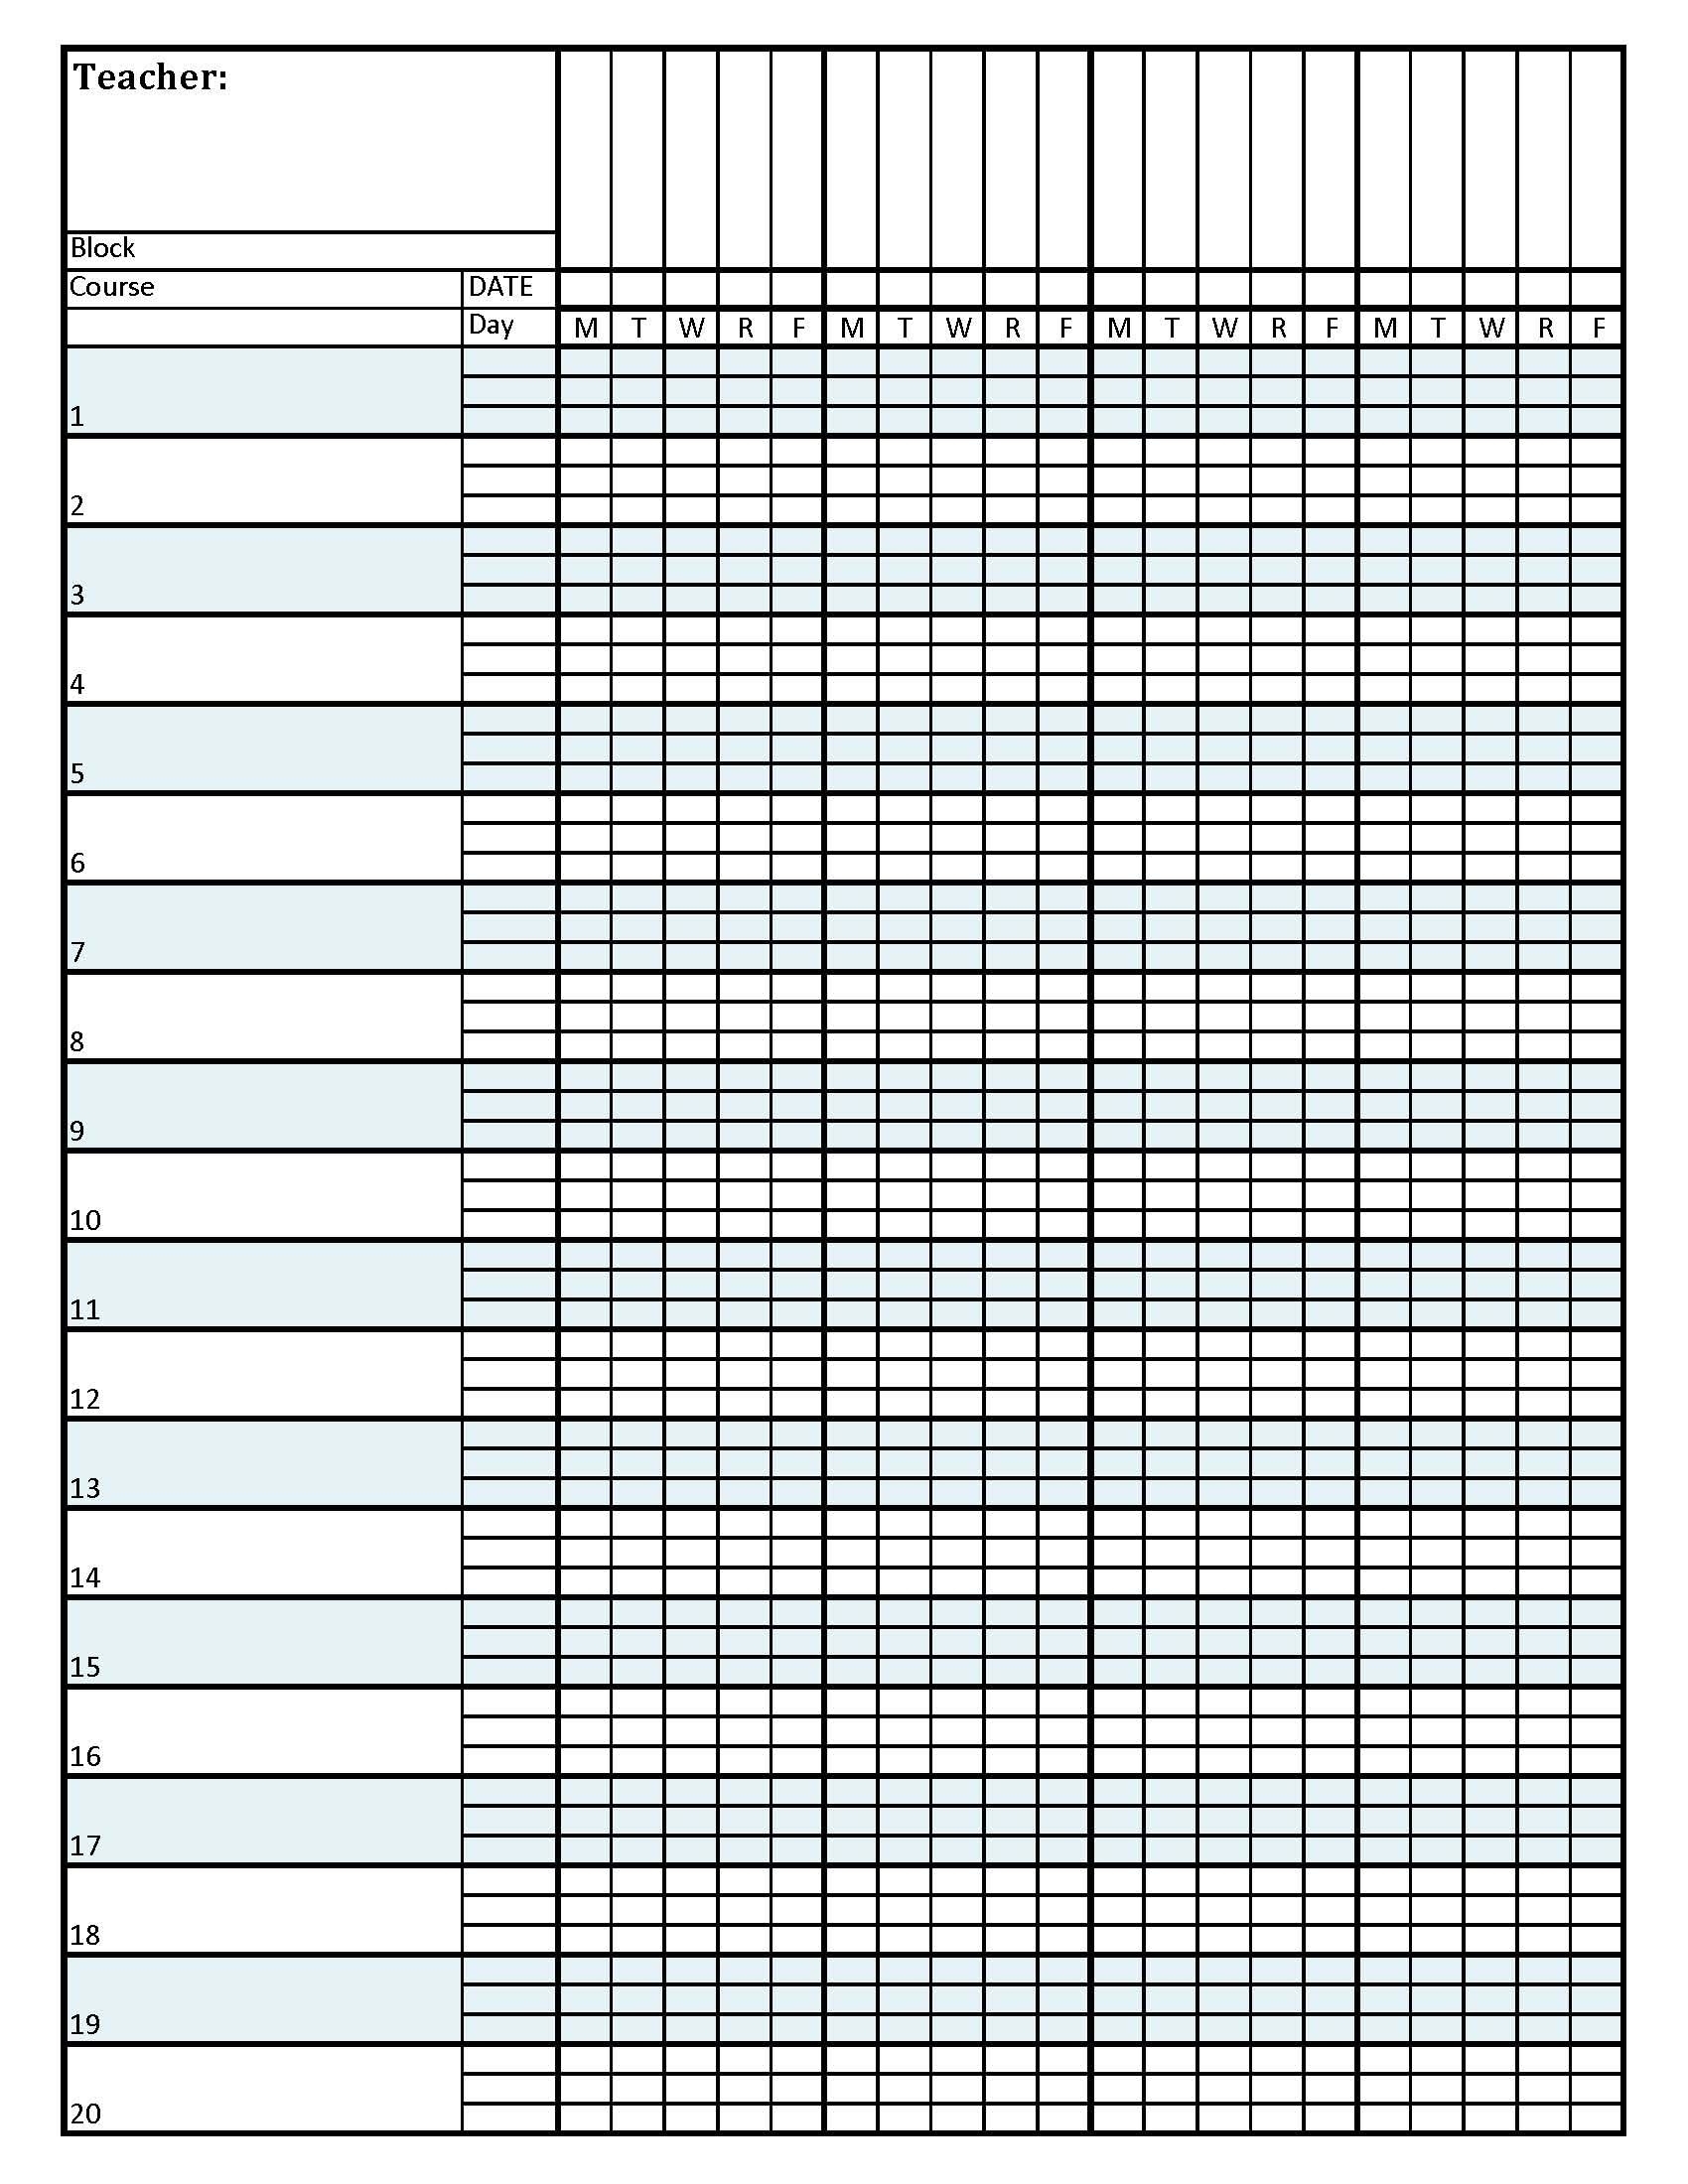 Grade Sheet Printable | Printable Gradebook | Sine Over Cosine Of for Print A Blank Spreadsheet 7 Rows